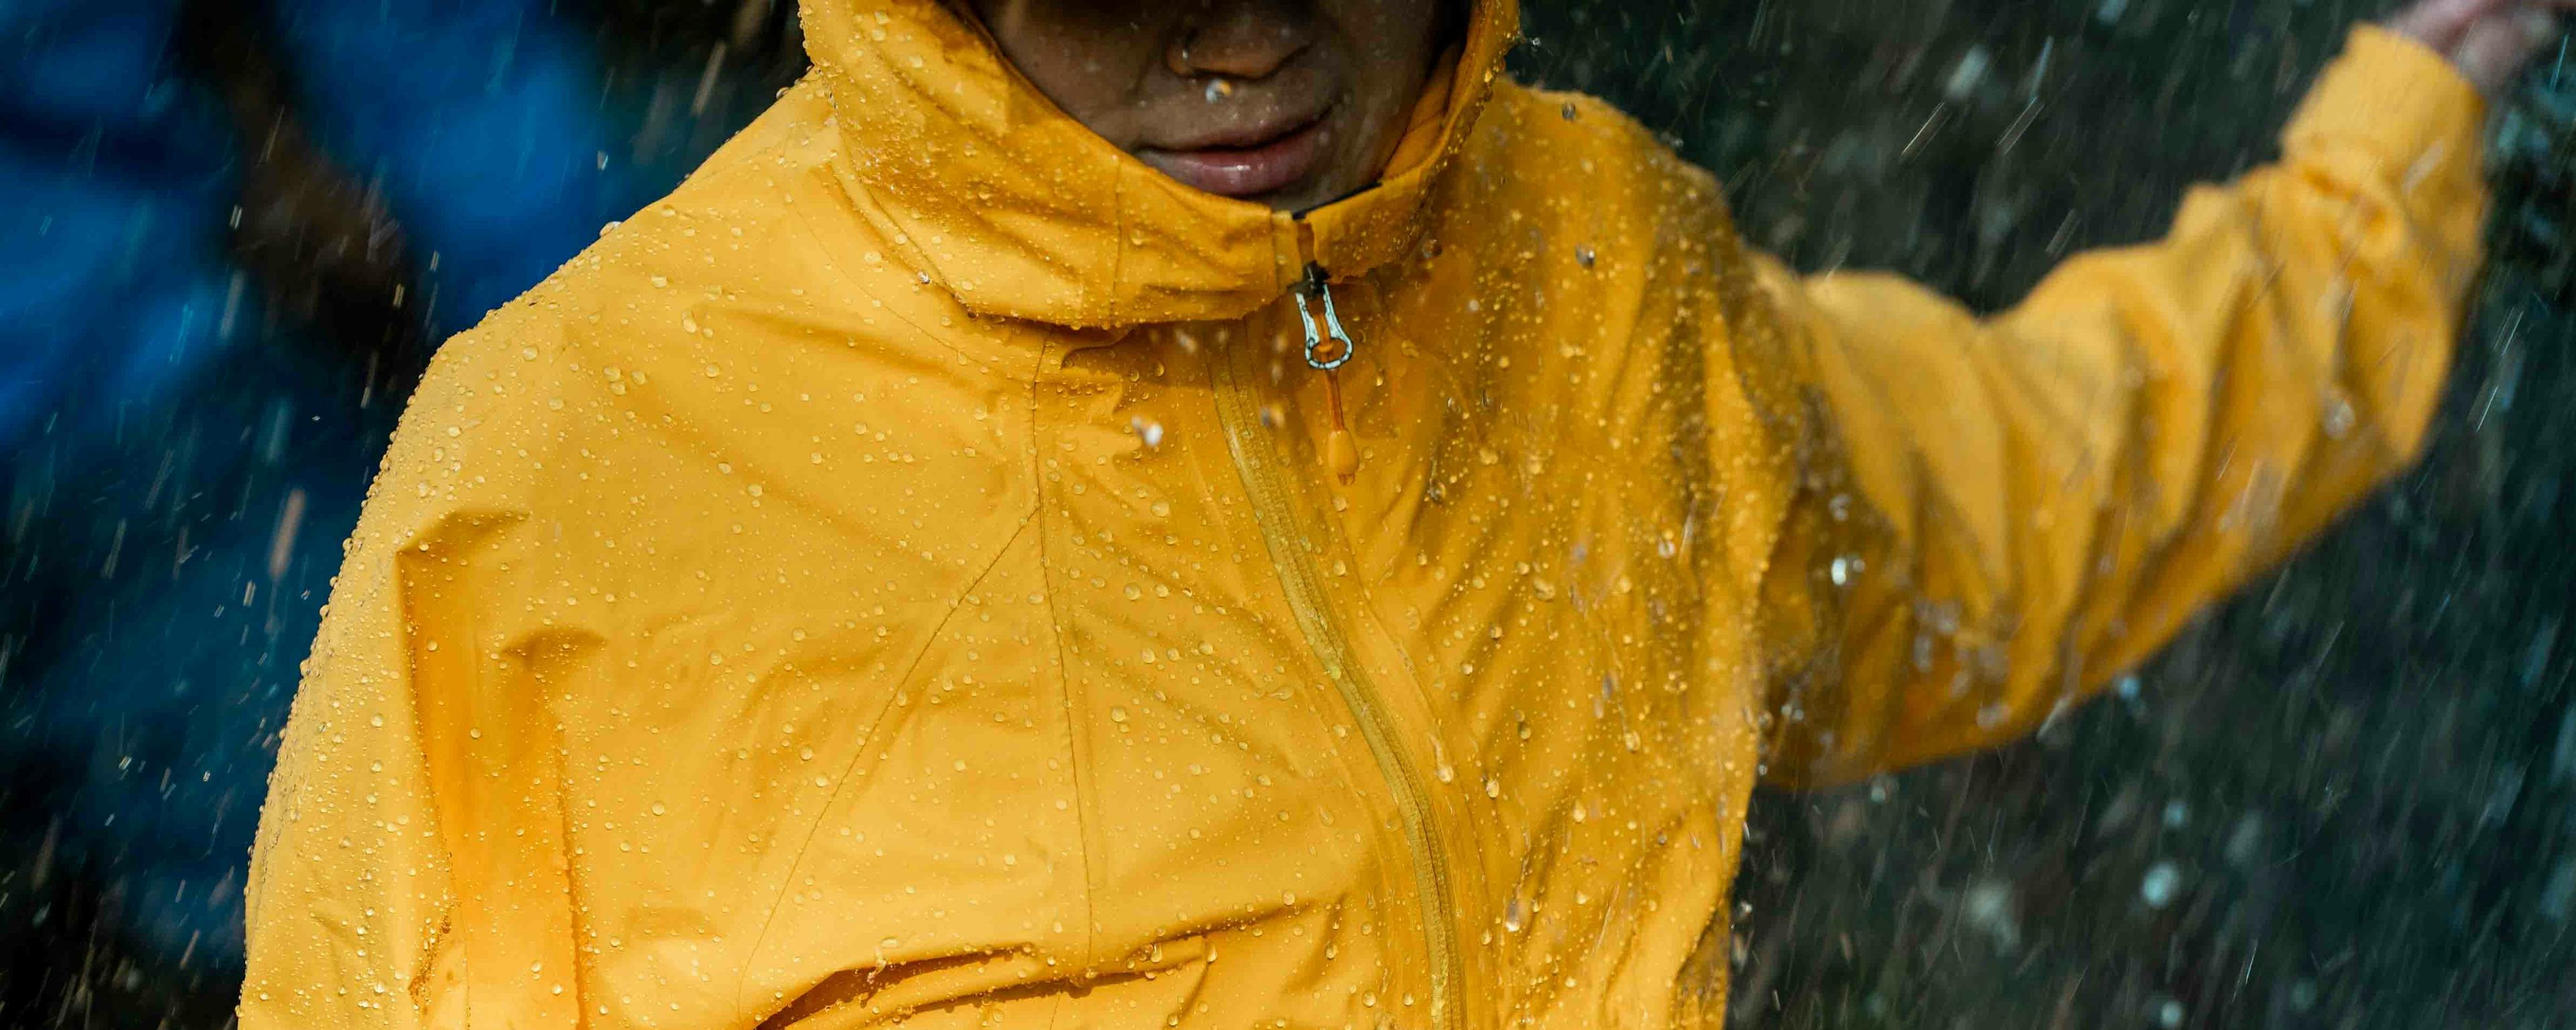 Hiker wearing a yellow rain jacket outside